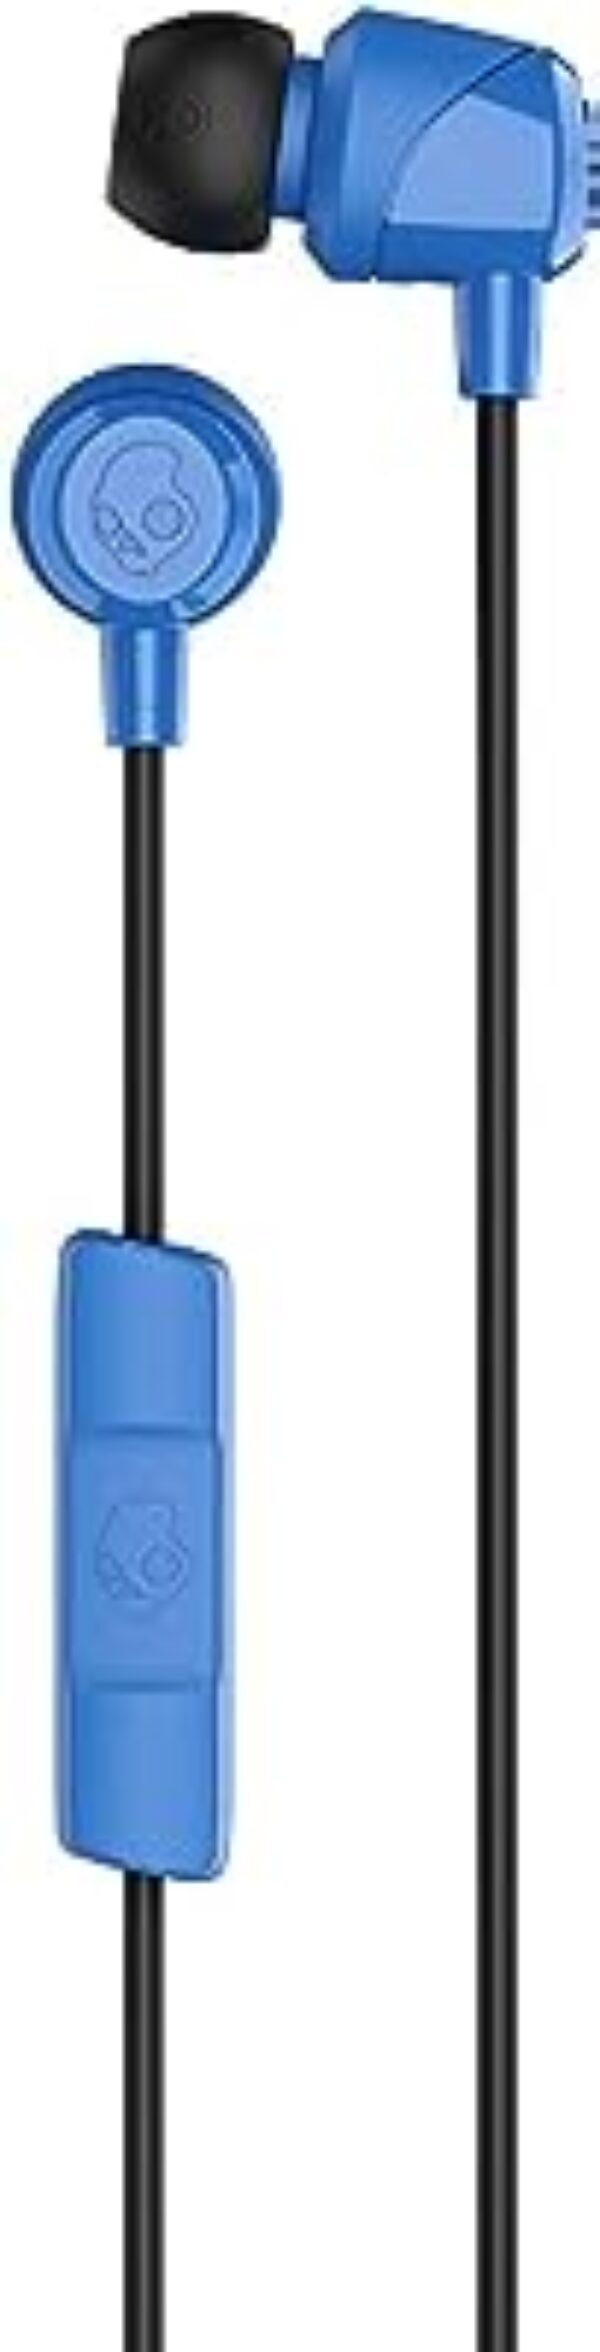 Skullcandy Jib Wired Earbuds Cobalt Blue